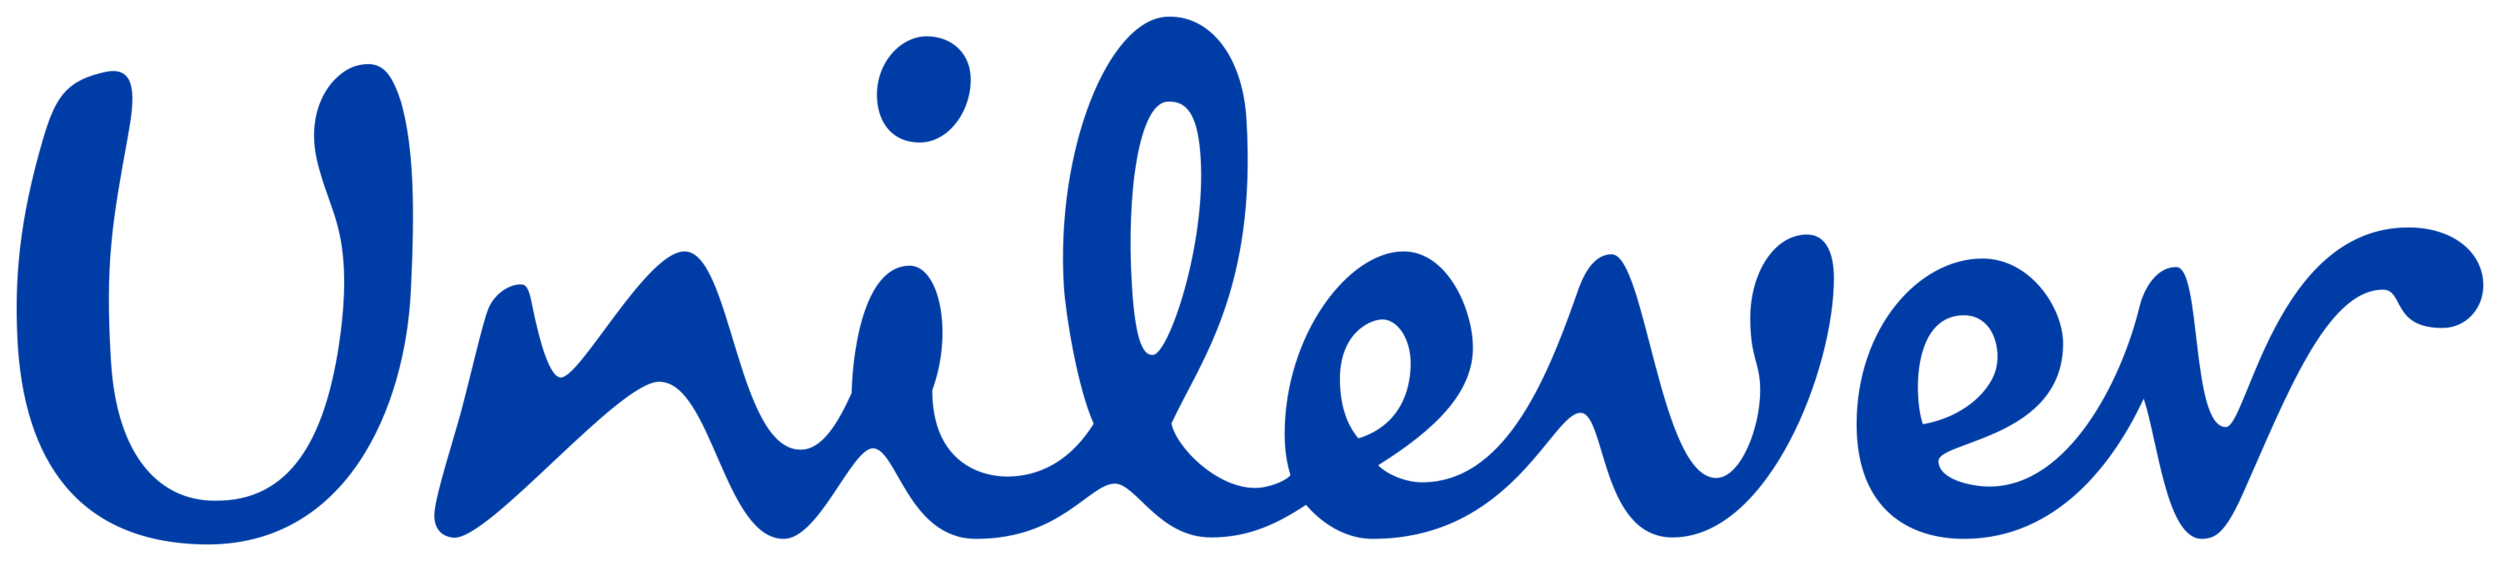 Unilever_text_logo.svg.png